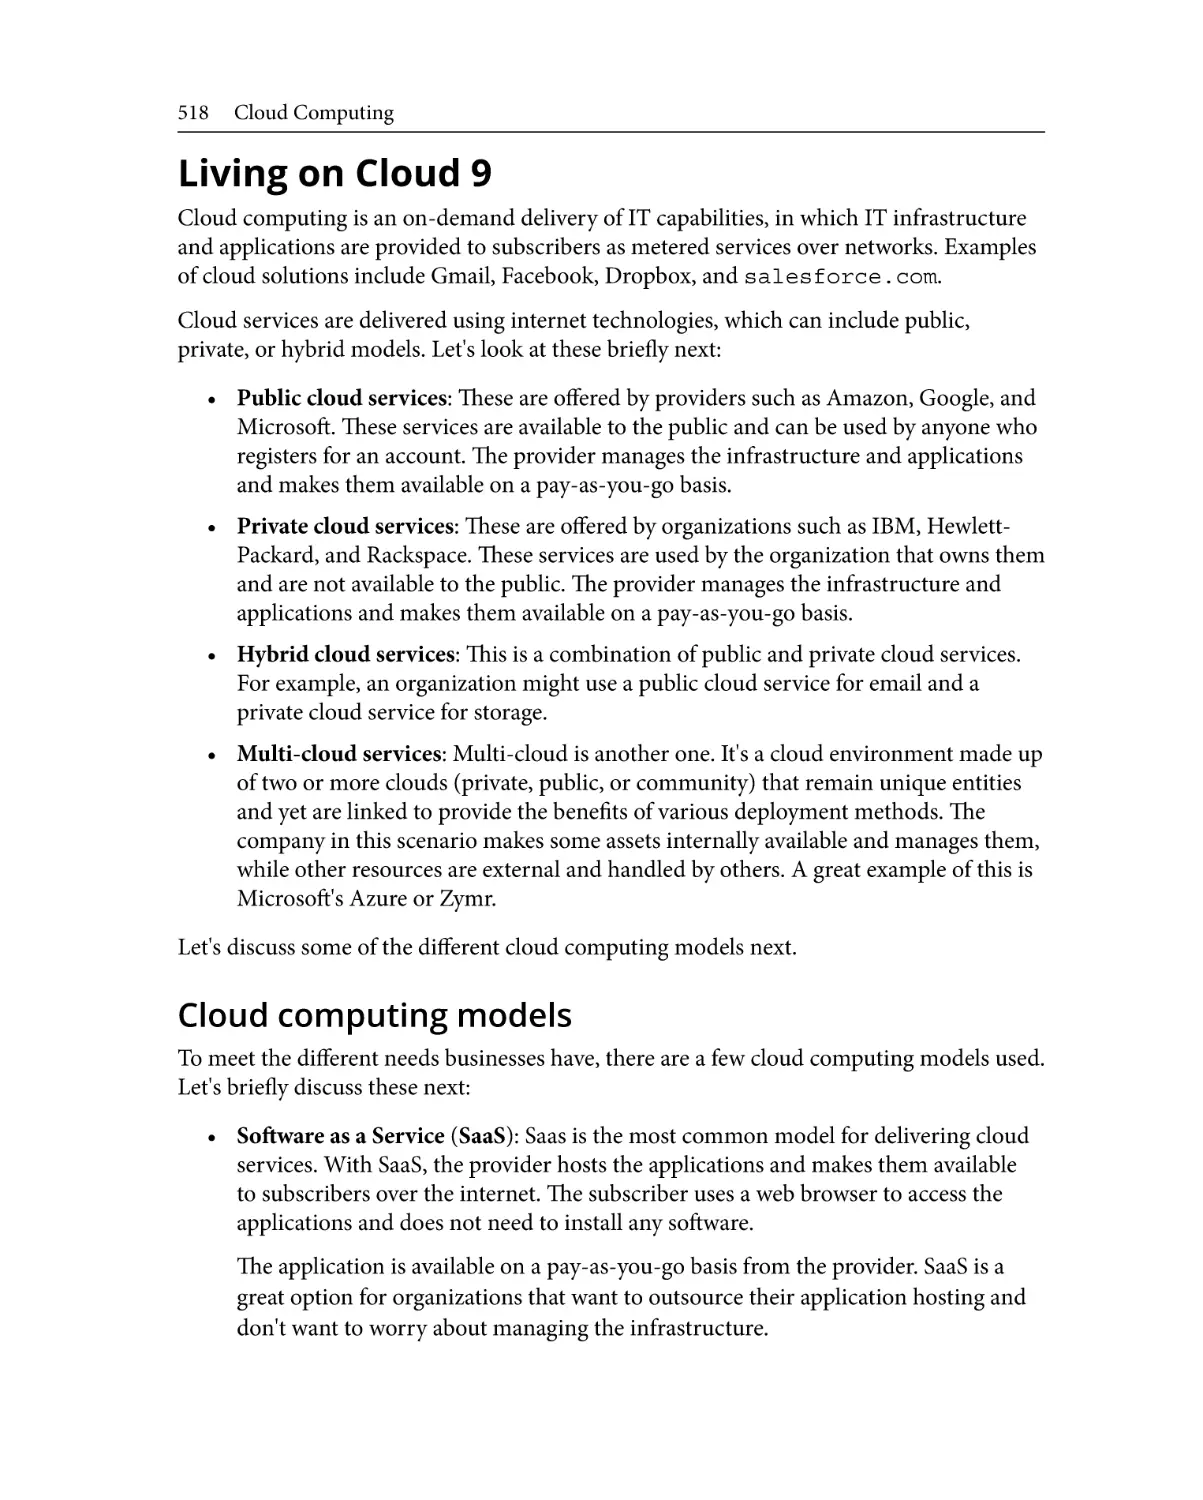 Living on Cloud 9
Cloud computing models